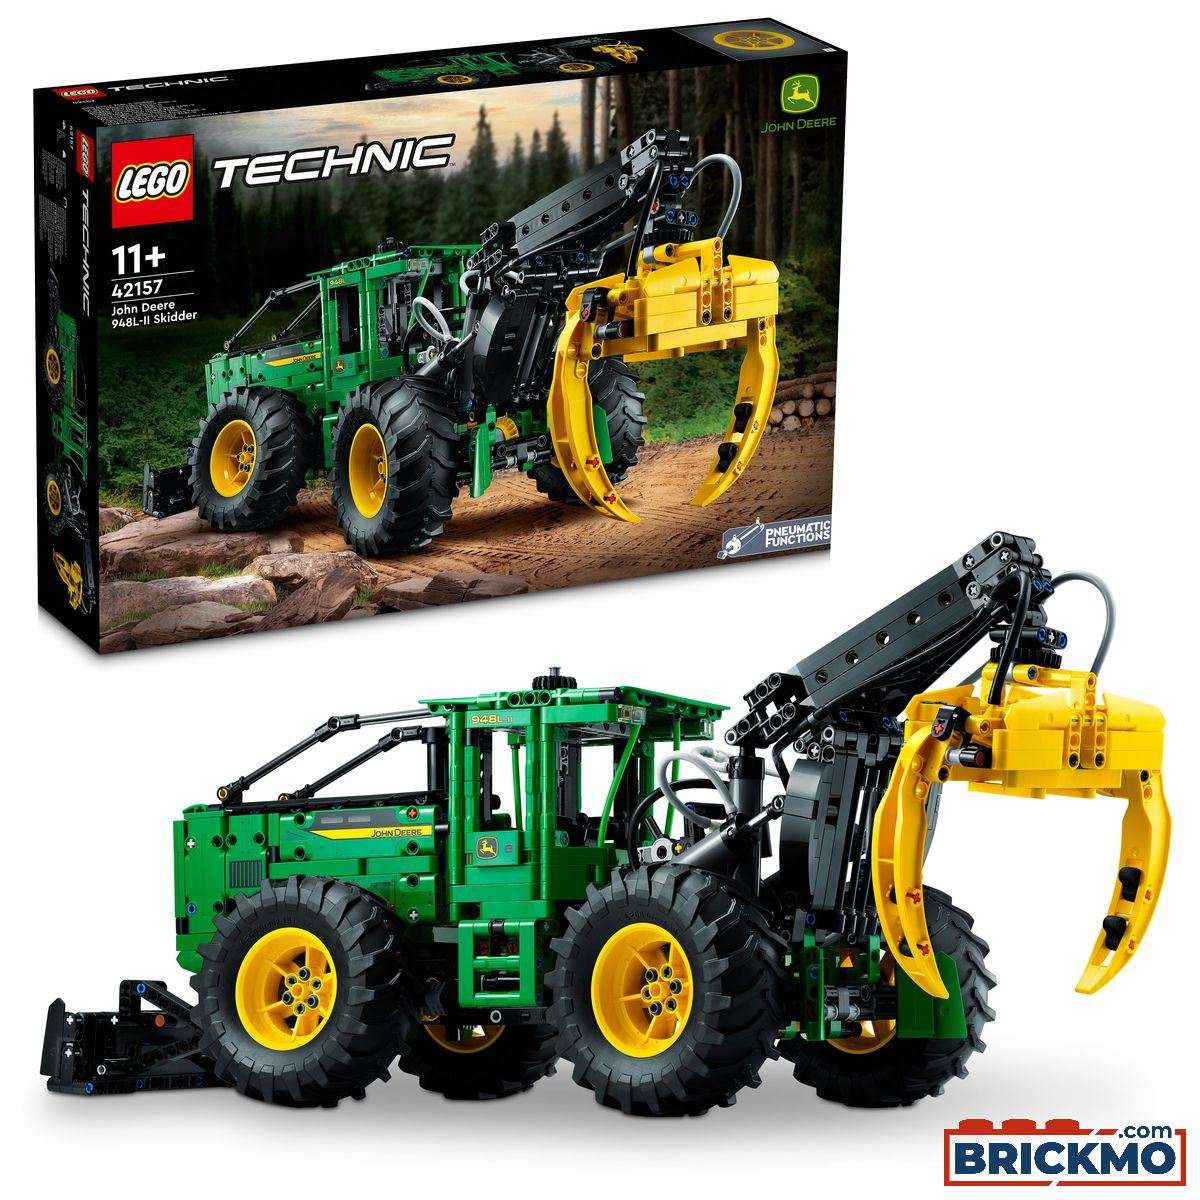 LEGO Technic 42157 John Deere 948L-II Skidder 42157